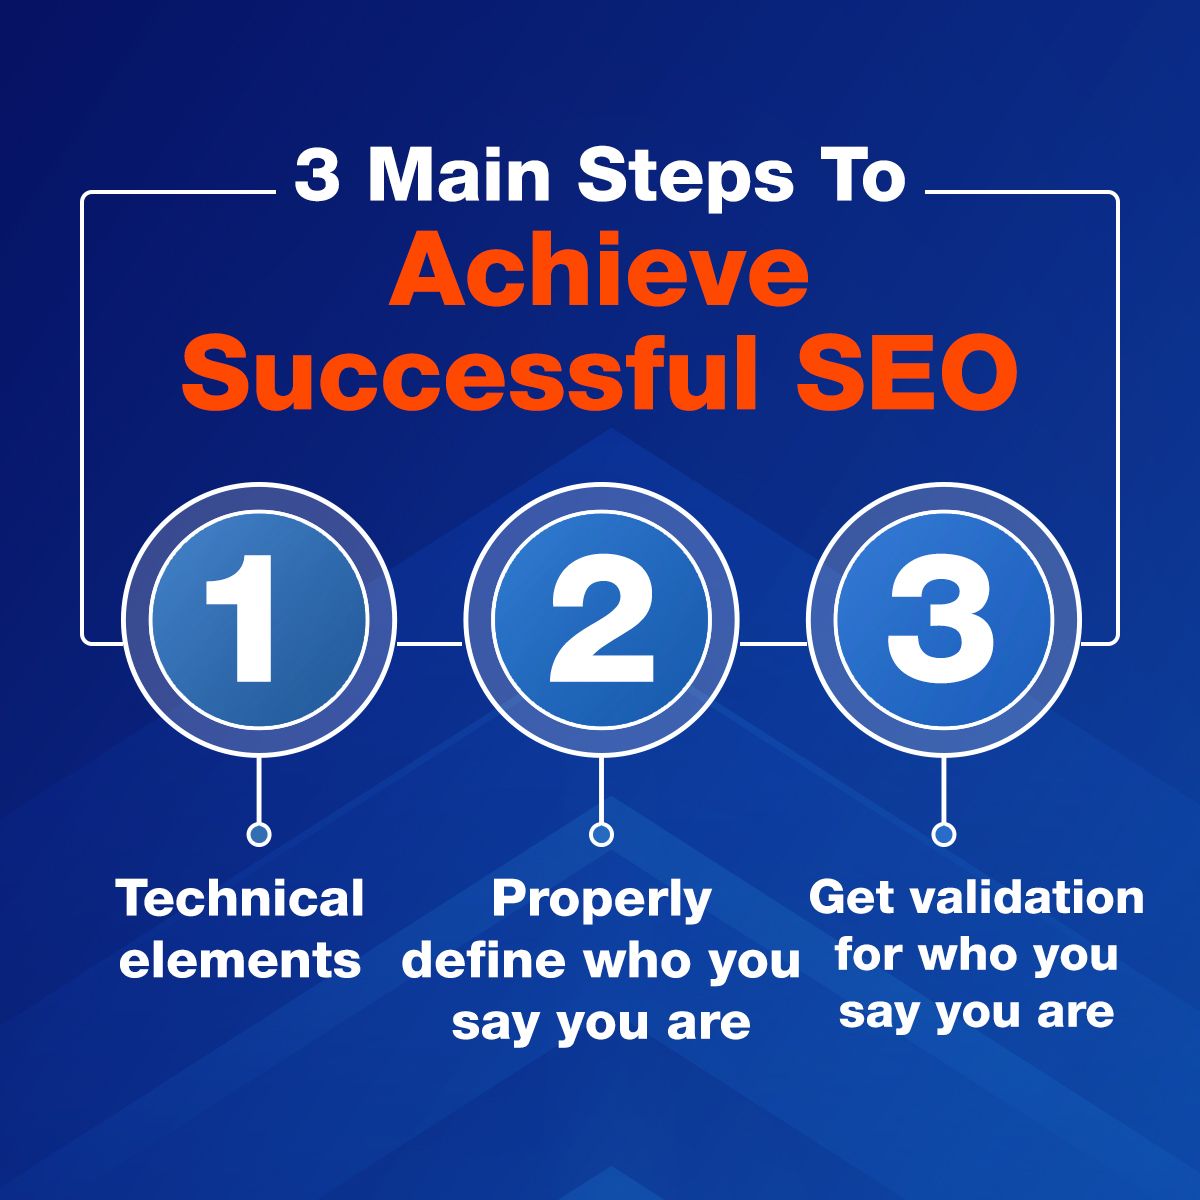 3 Main Steps To Achieve a Successful SEO